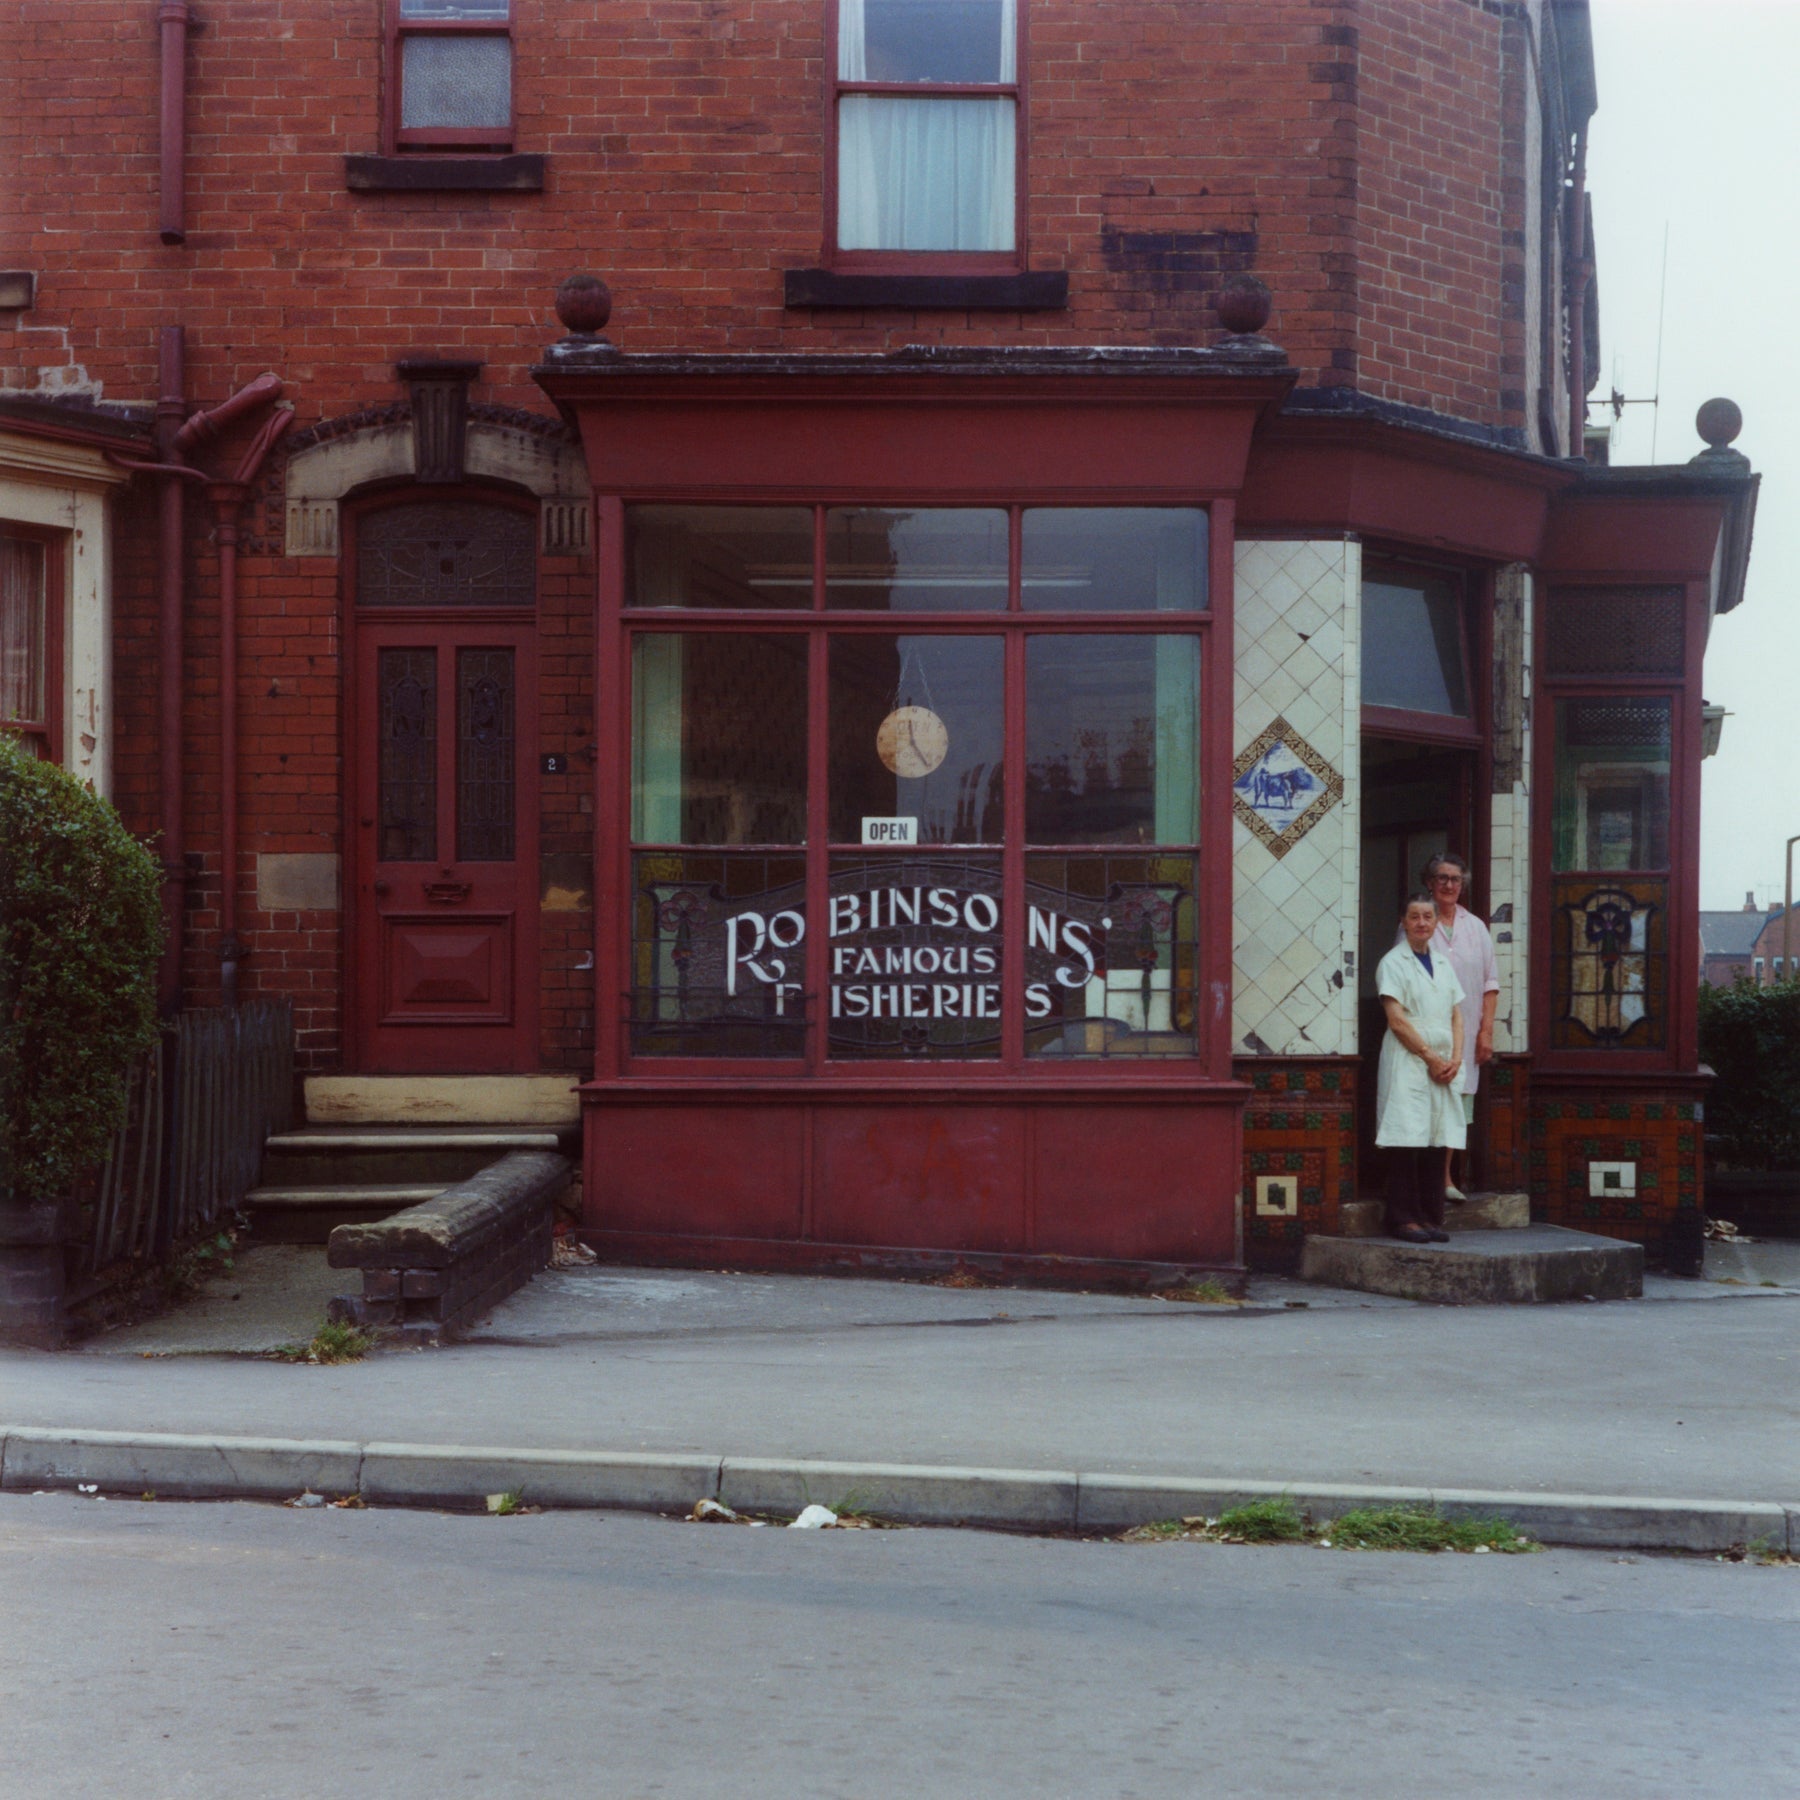 Mrs. Collins & Mrs. Clayton, Beck Road, Leeds, 1974 - 7x9" Print